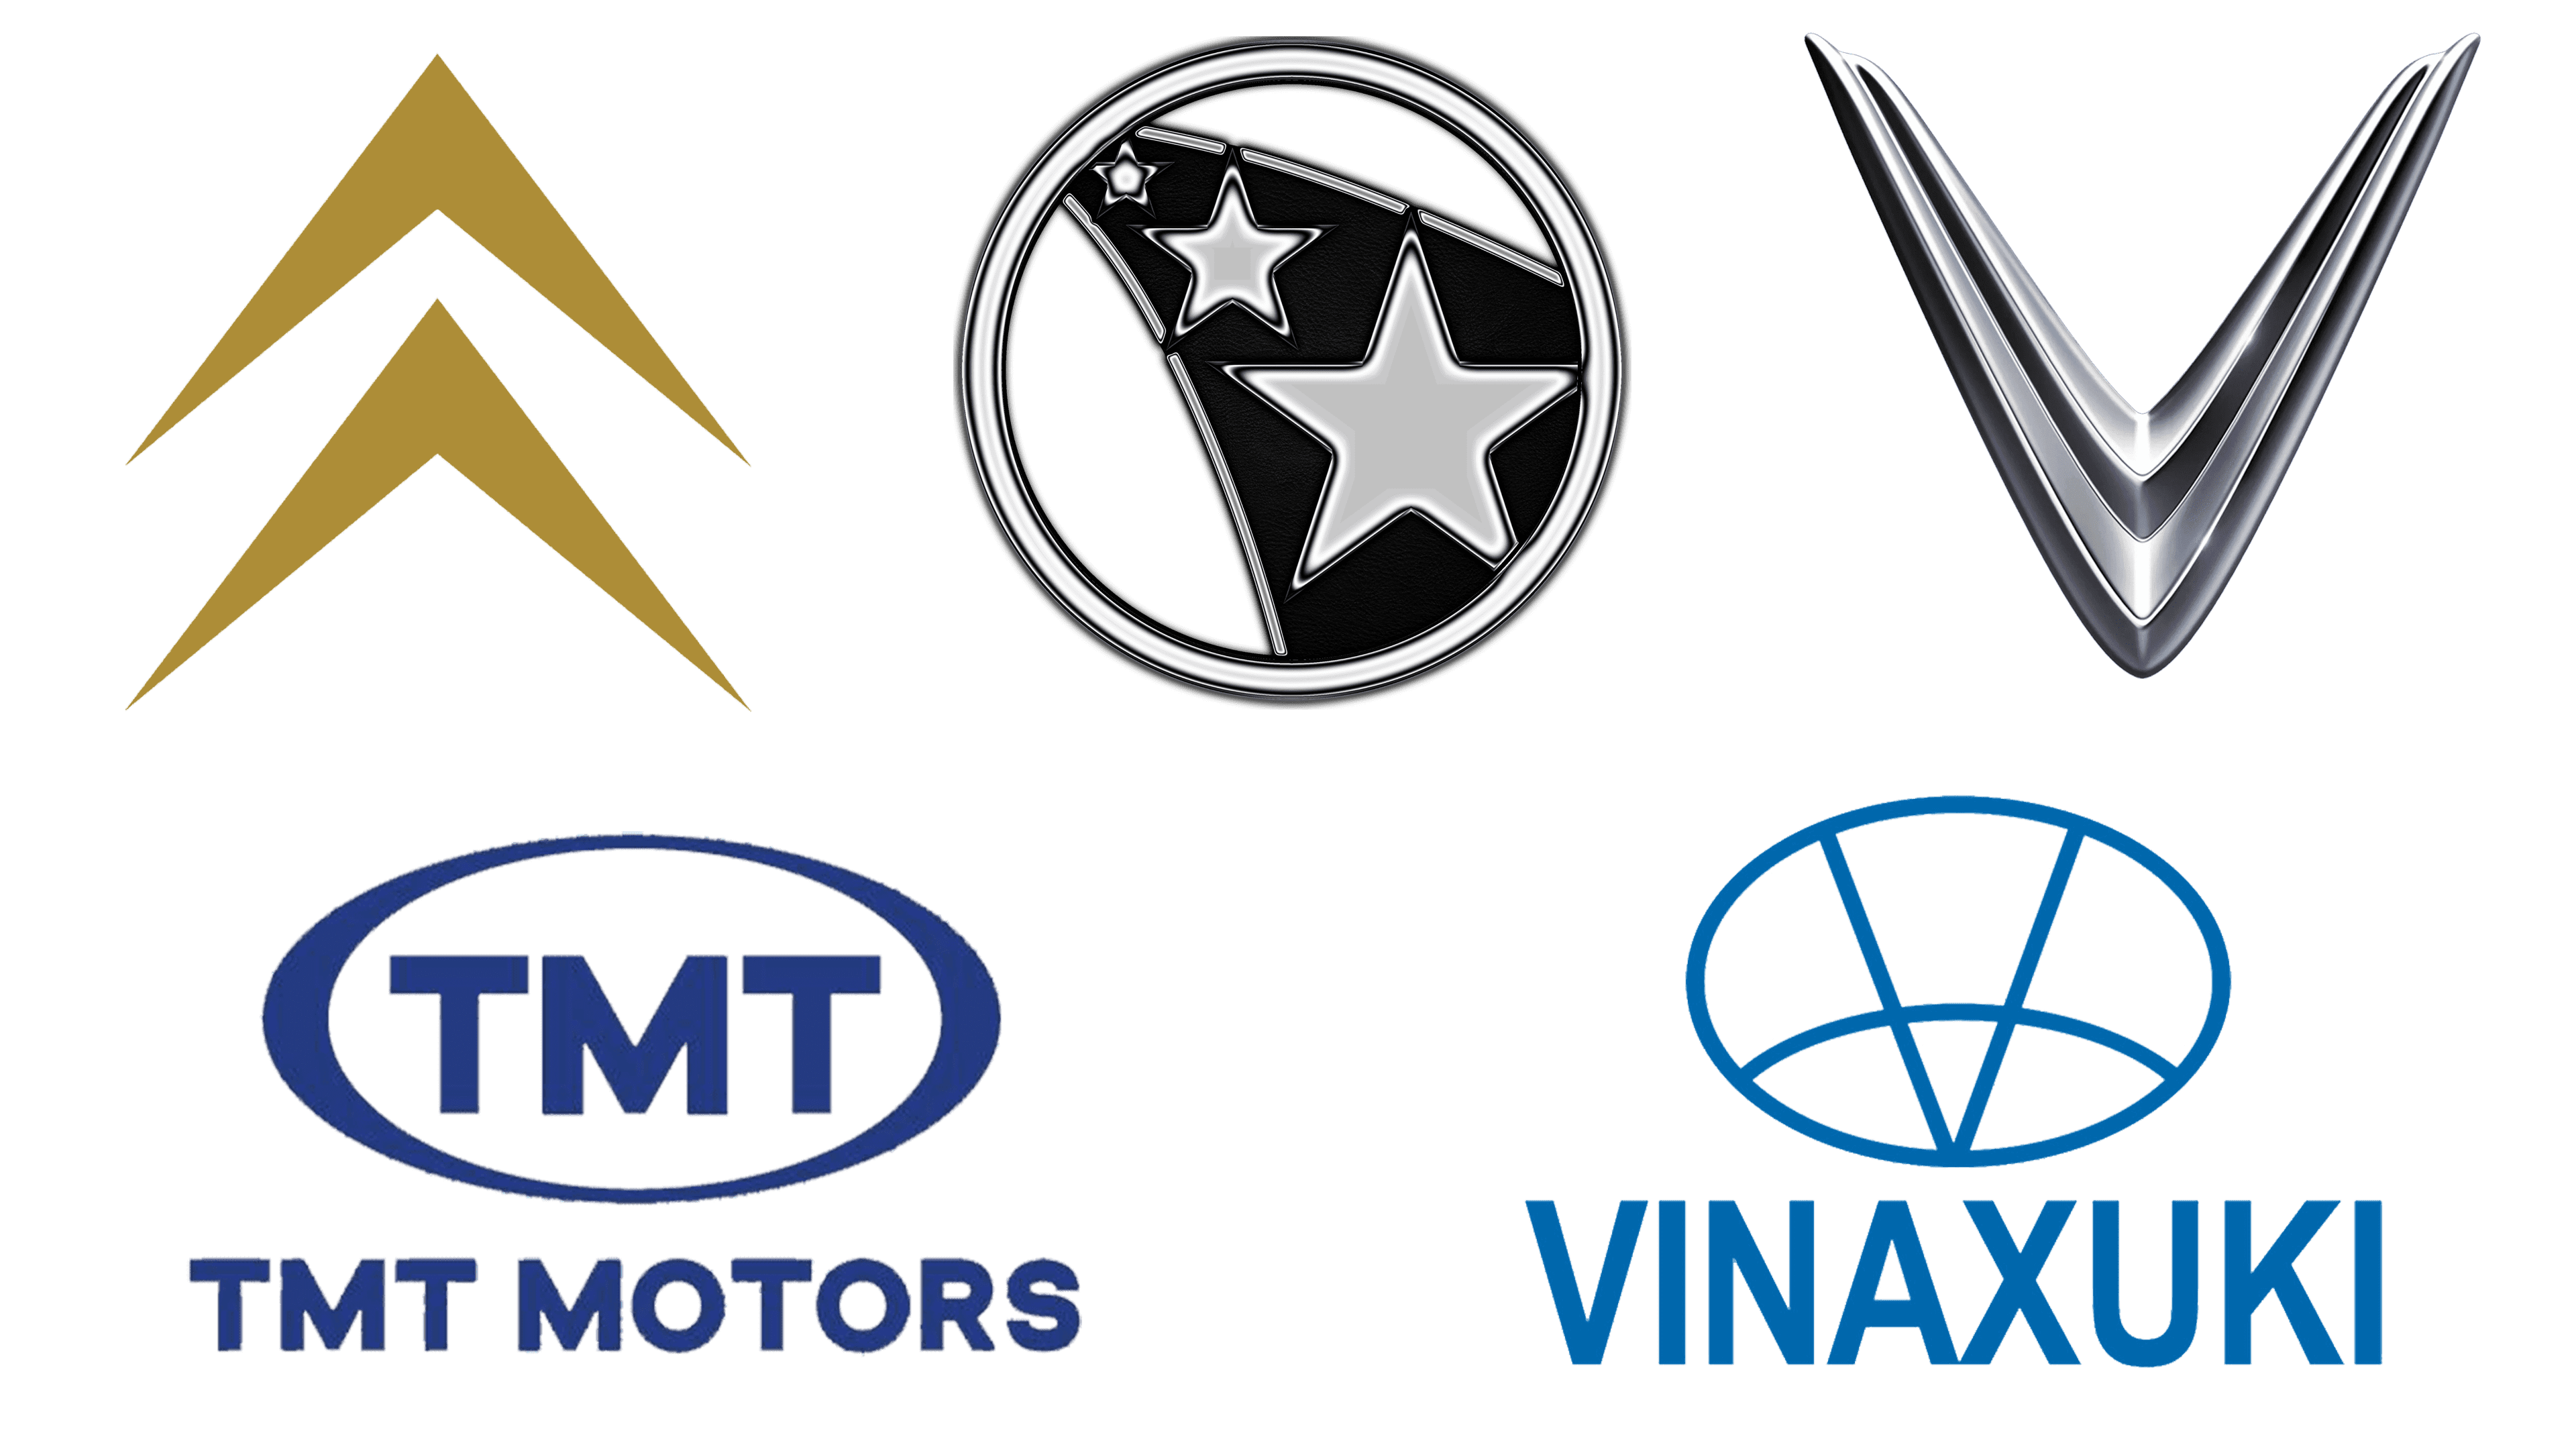 Vietnam car brands – manufacturer car companies, logos